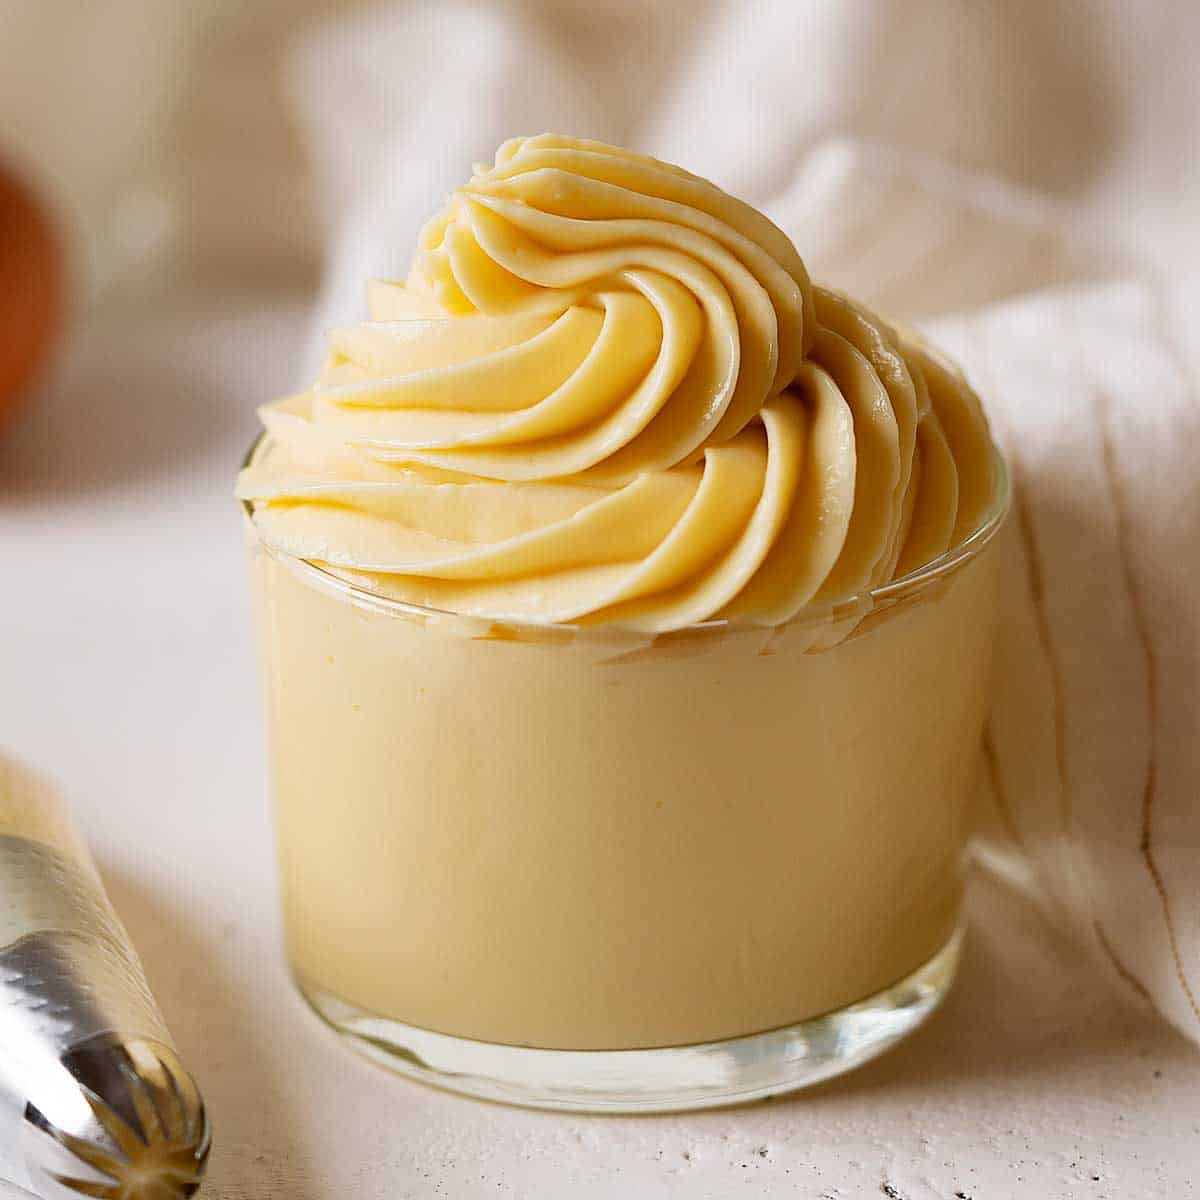 https://www.elmundoeats.com/wp-content/uploads/2021/06/FP-Healthy-Pastry-Cream-in-a-glass.jpg